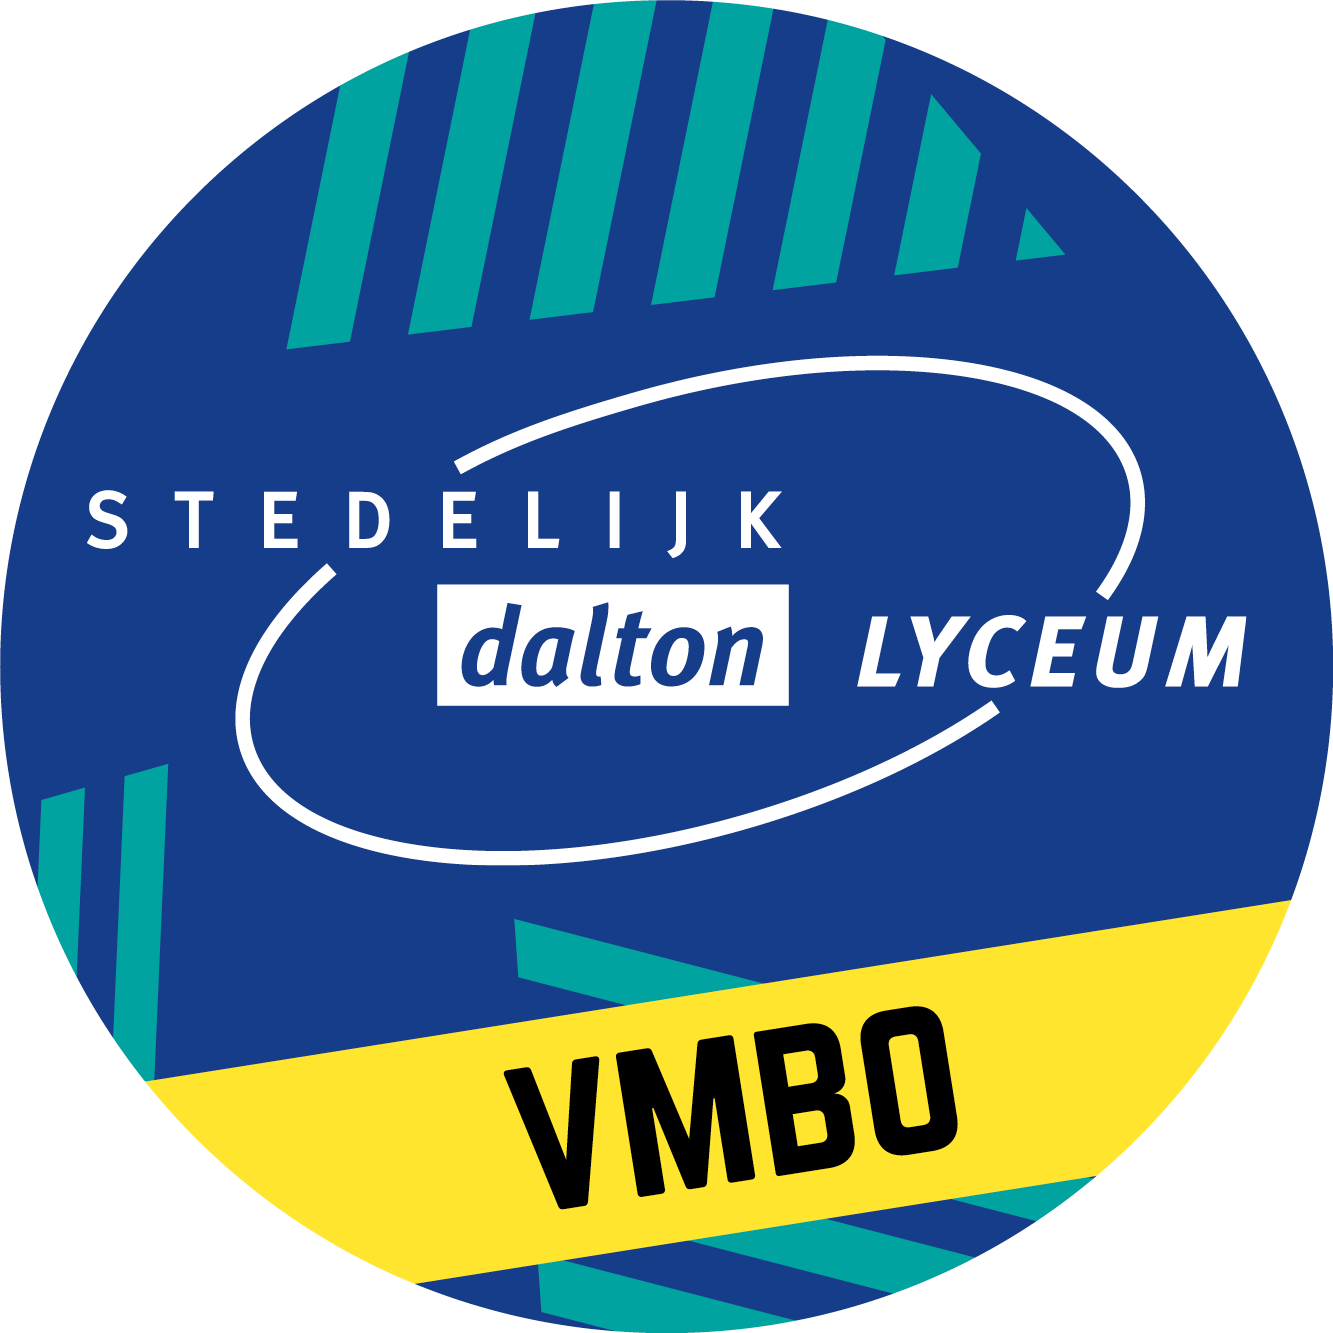 Stedelijk Dalton Lyceum VMBO